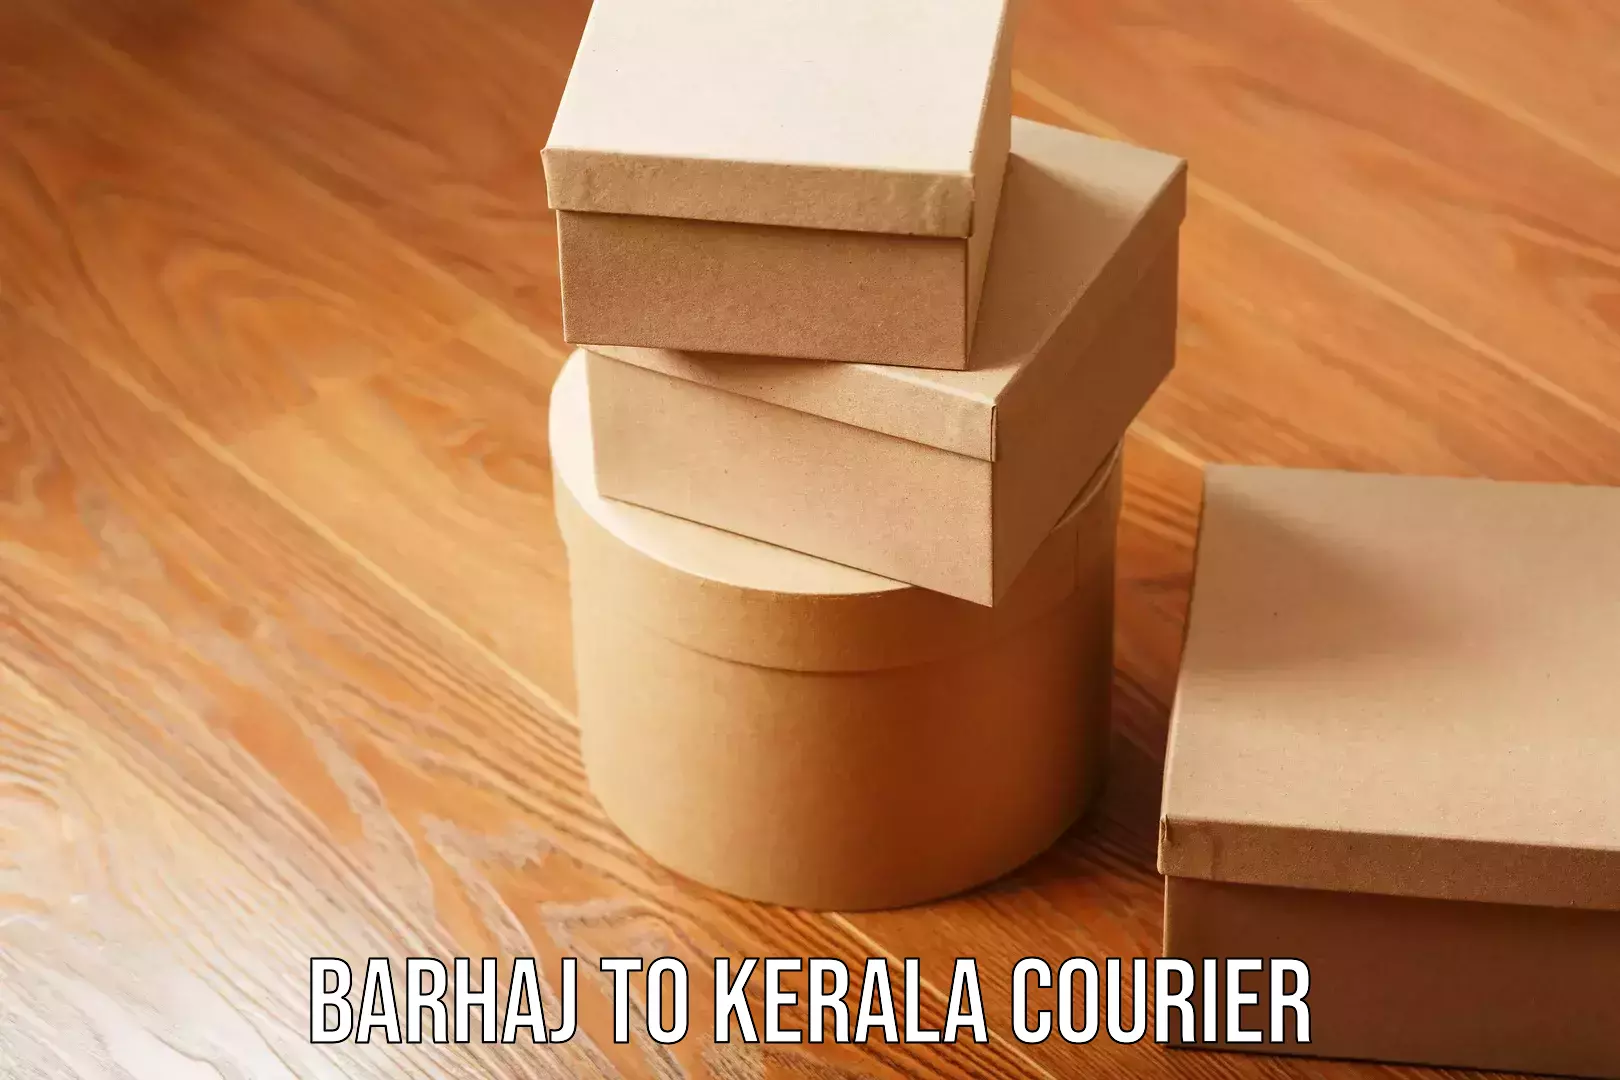 Courier insurance Barhaj to Kerala